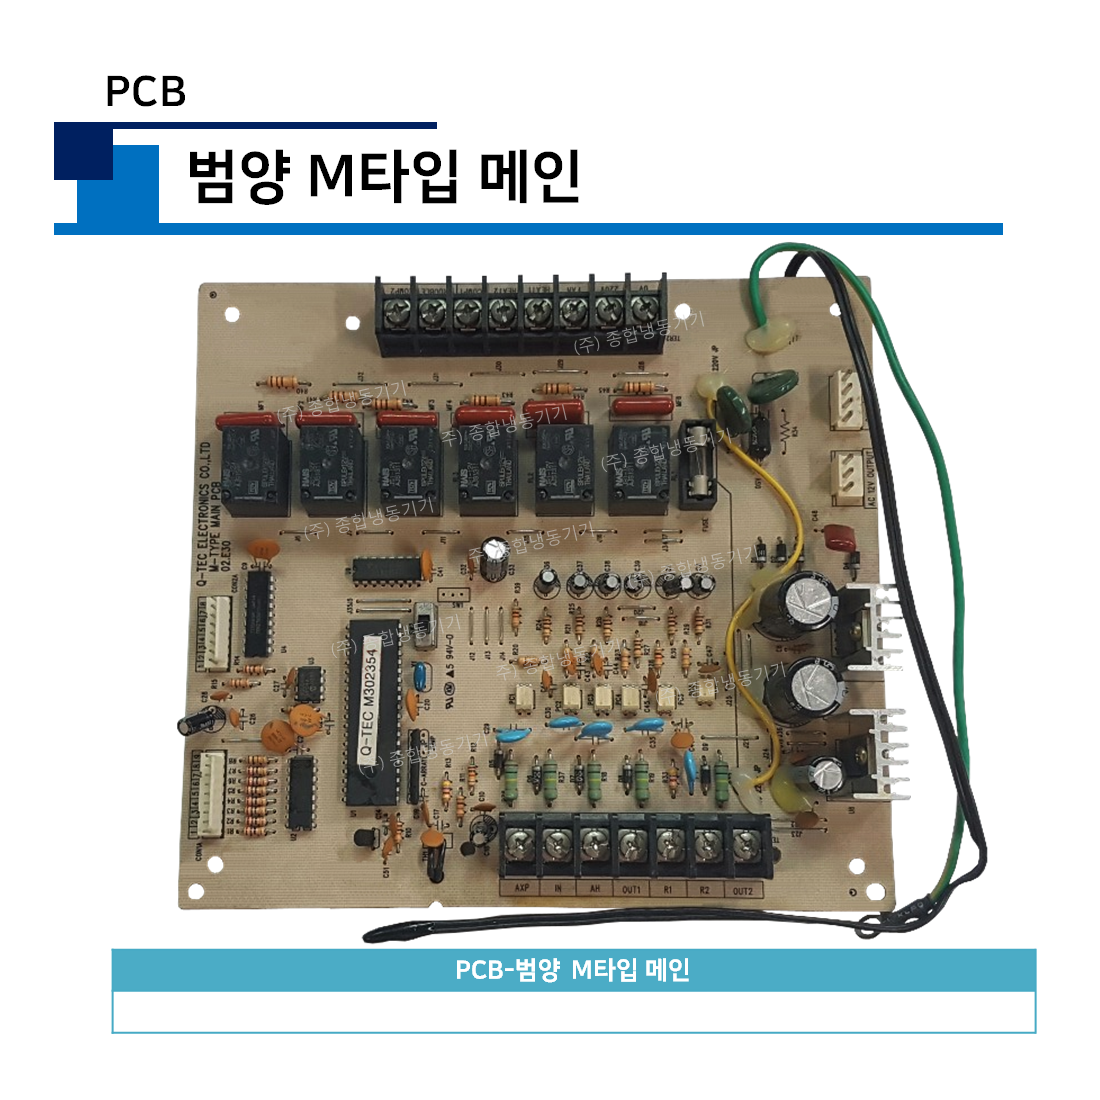 PCB-범양 M타입 메인